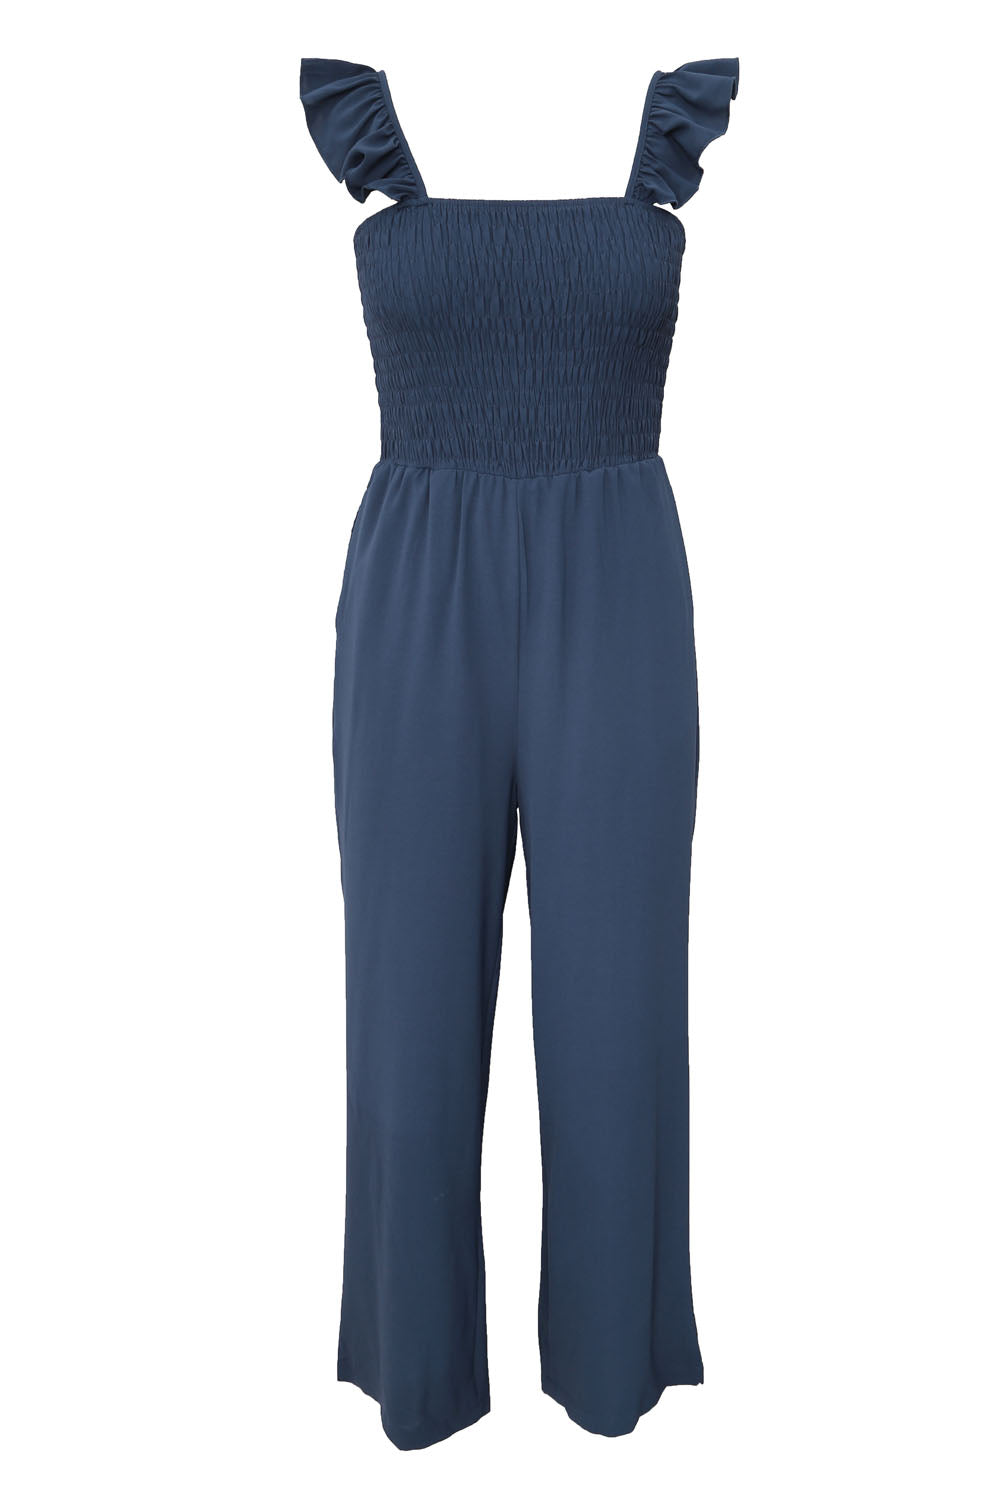 Blue Ruffle Sleeve Smocked Bodice Wide Leg Jumpsuit for Women LC643773-5